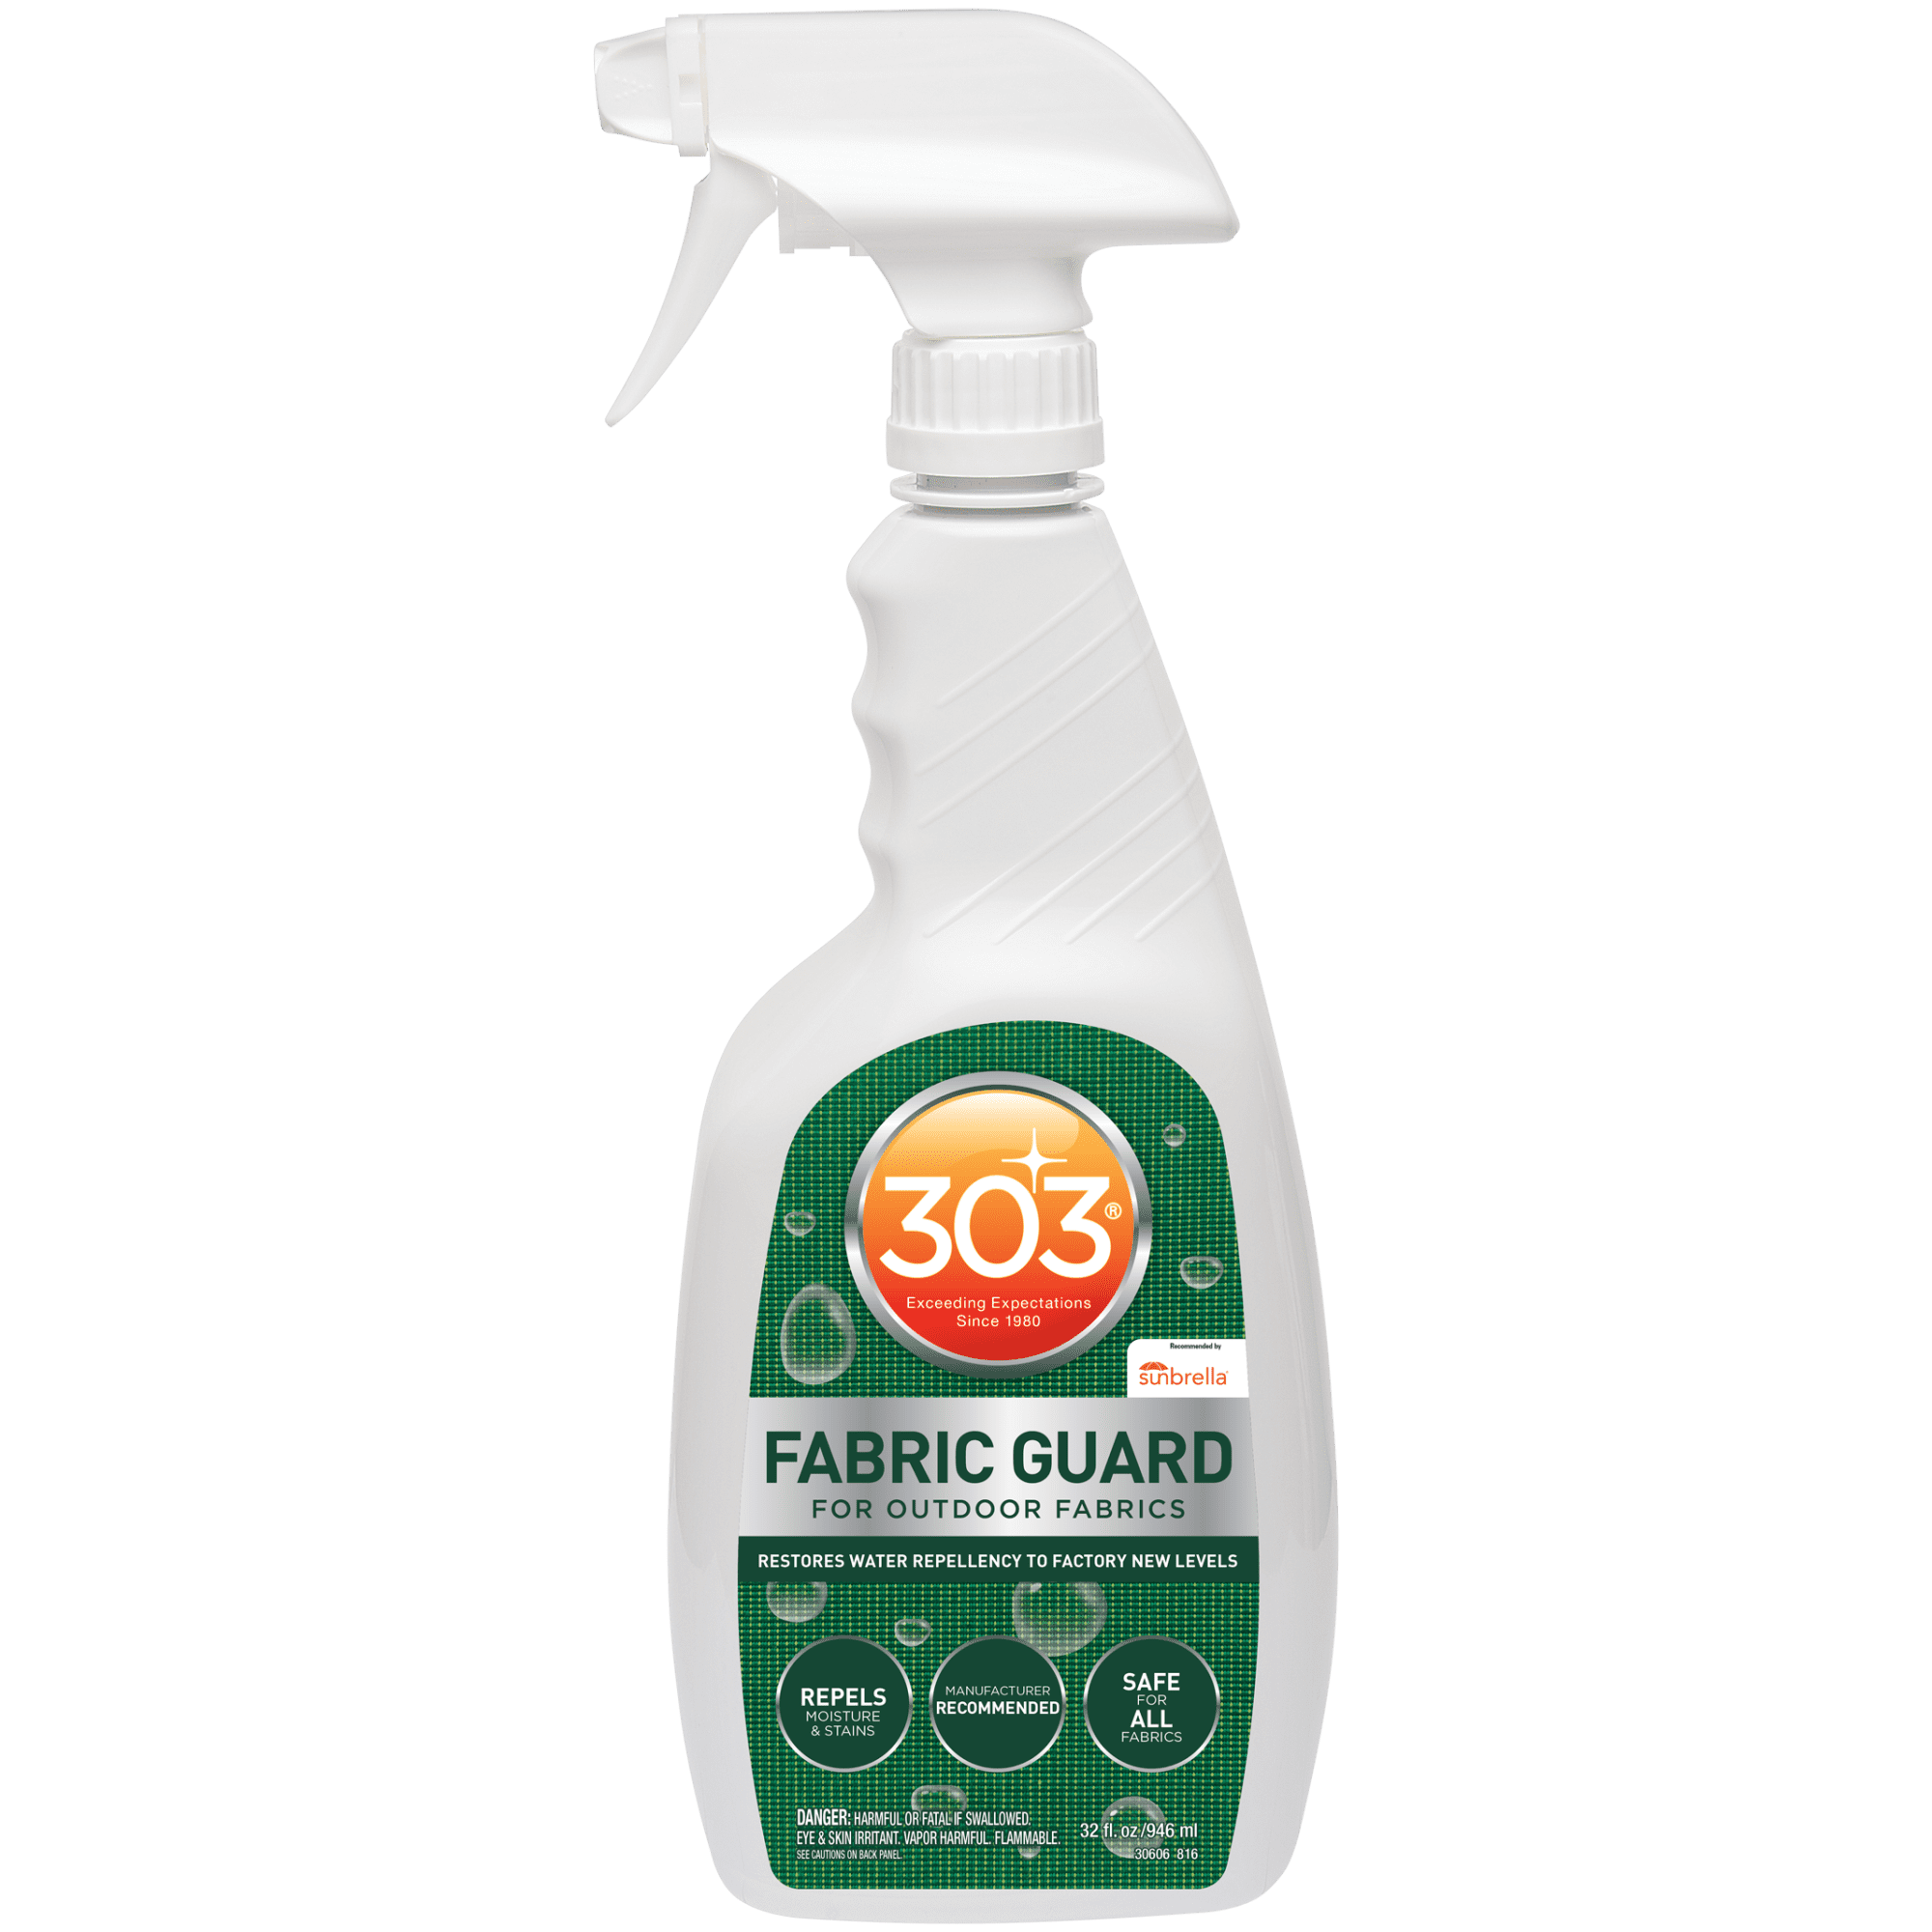 Shop Fabric Waterproof Spray online